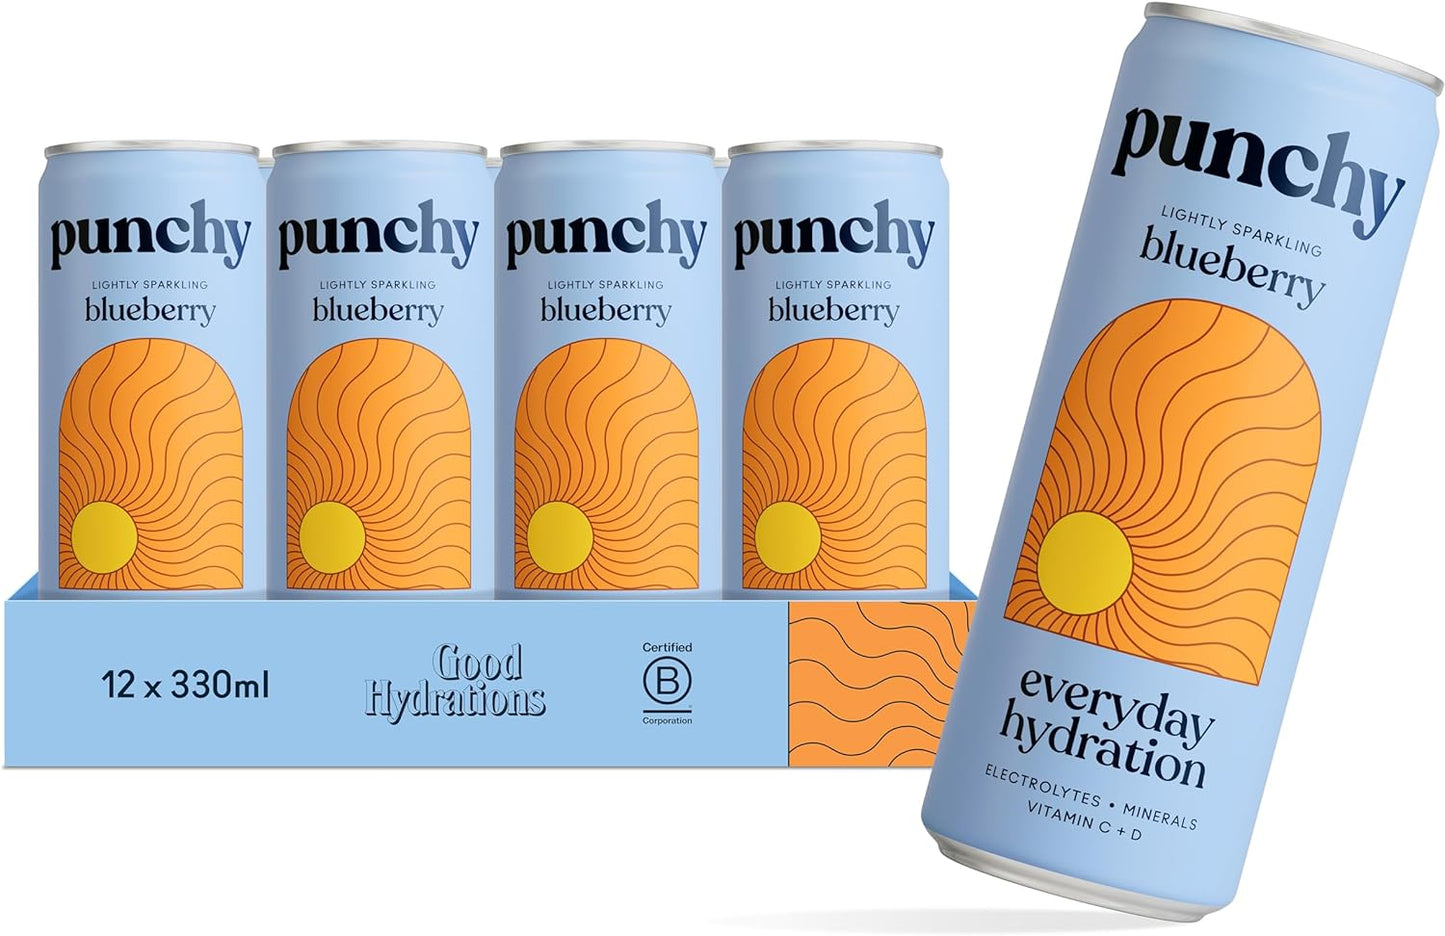 Punchy - Everyday Hydration Blueberry